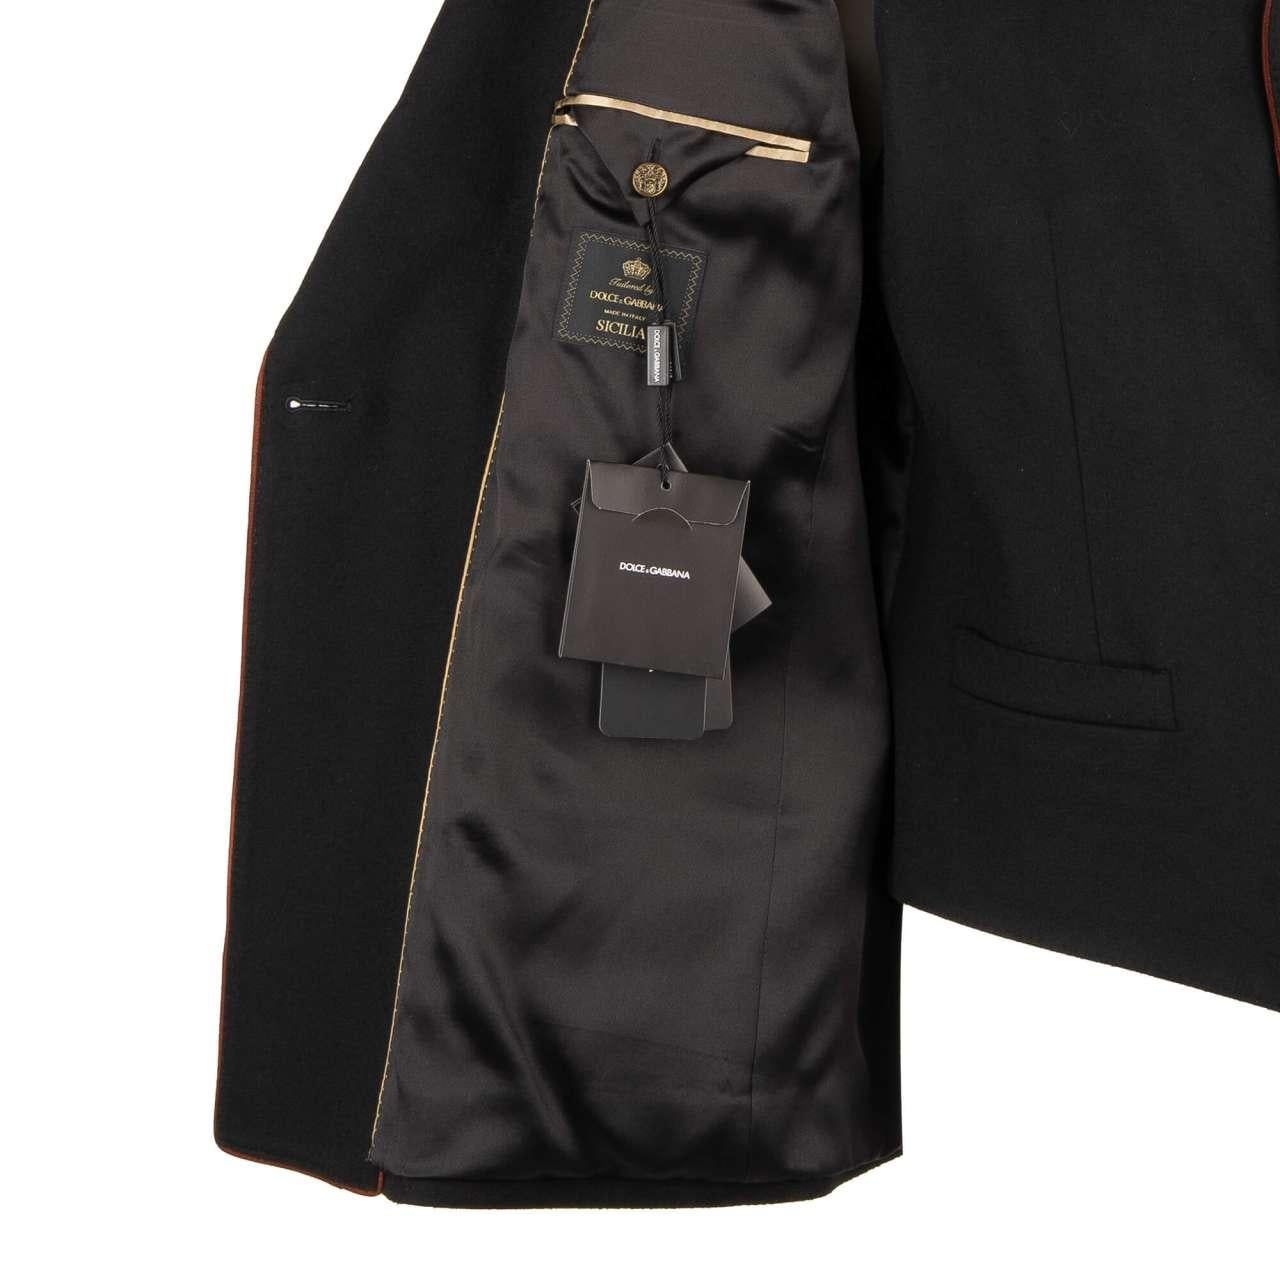 D&G Cashmere Jacket Vest Ensemble SICILIA with Embroidered Logo Crown Black 48 For Sale 5